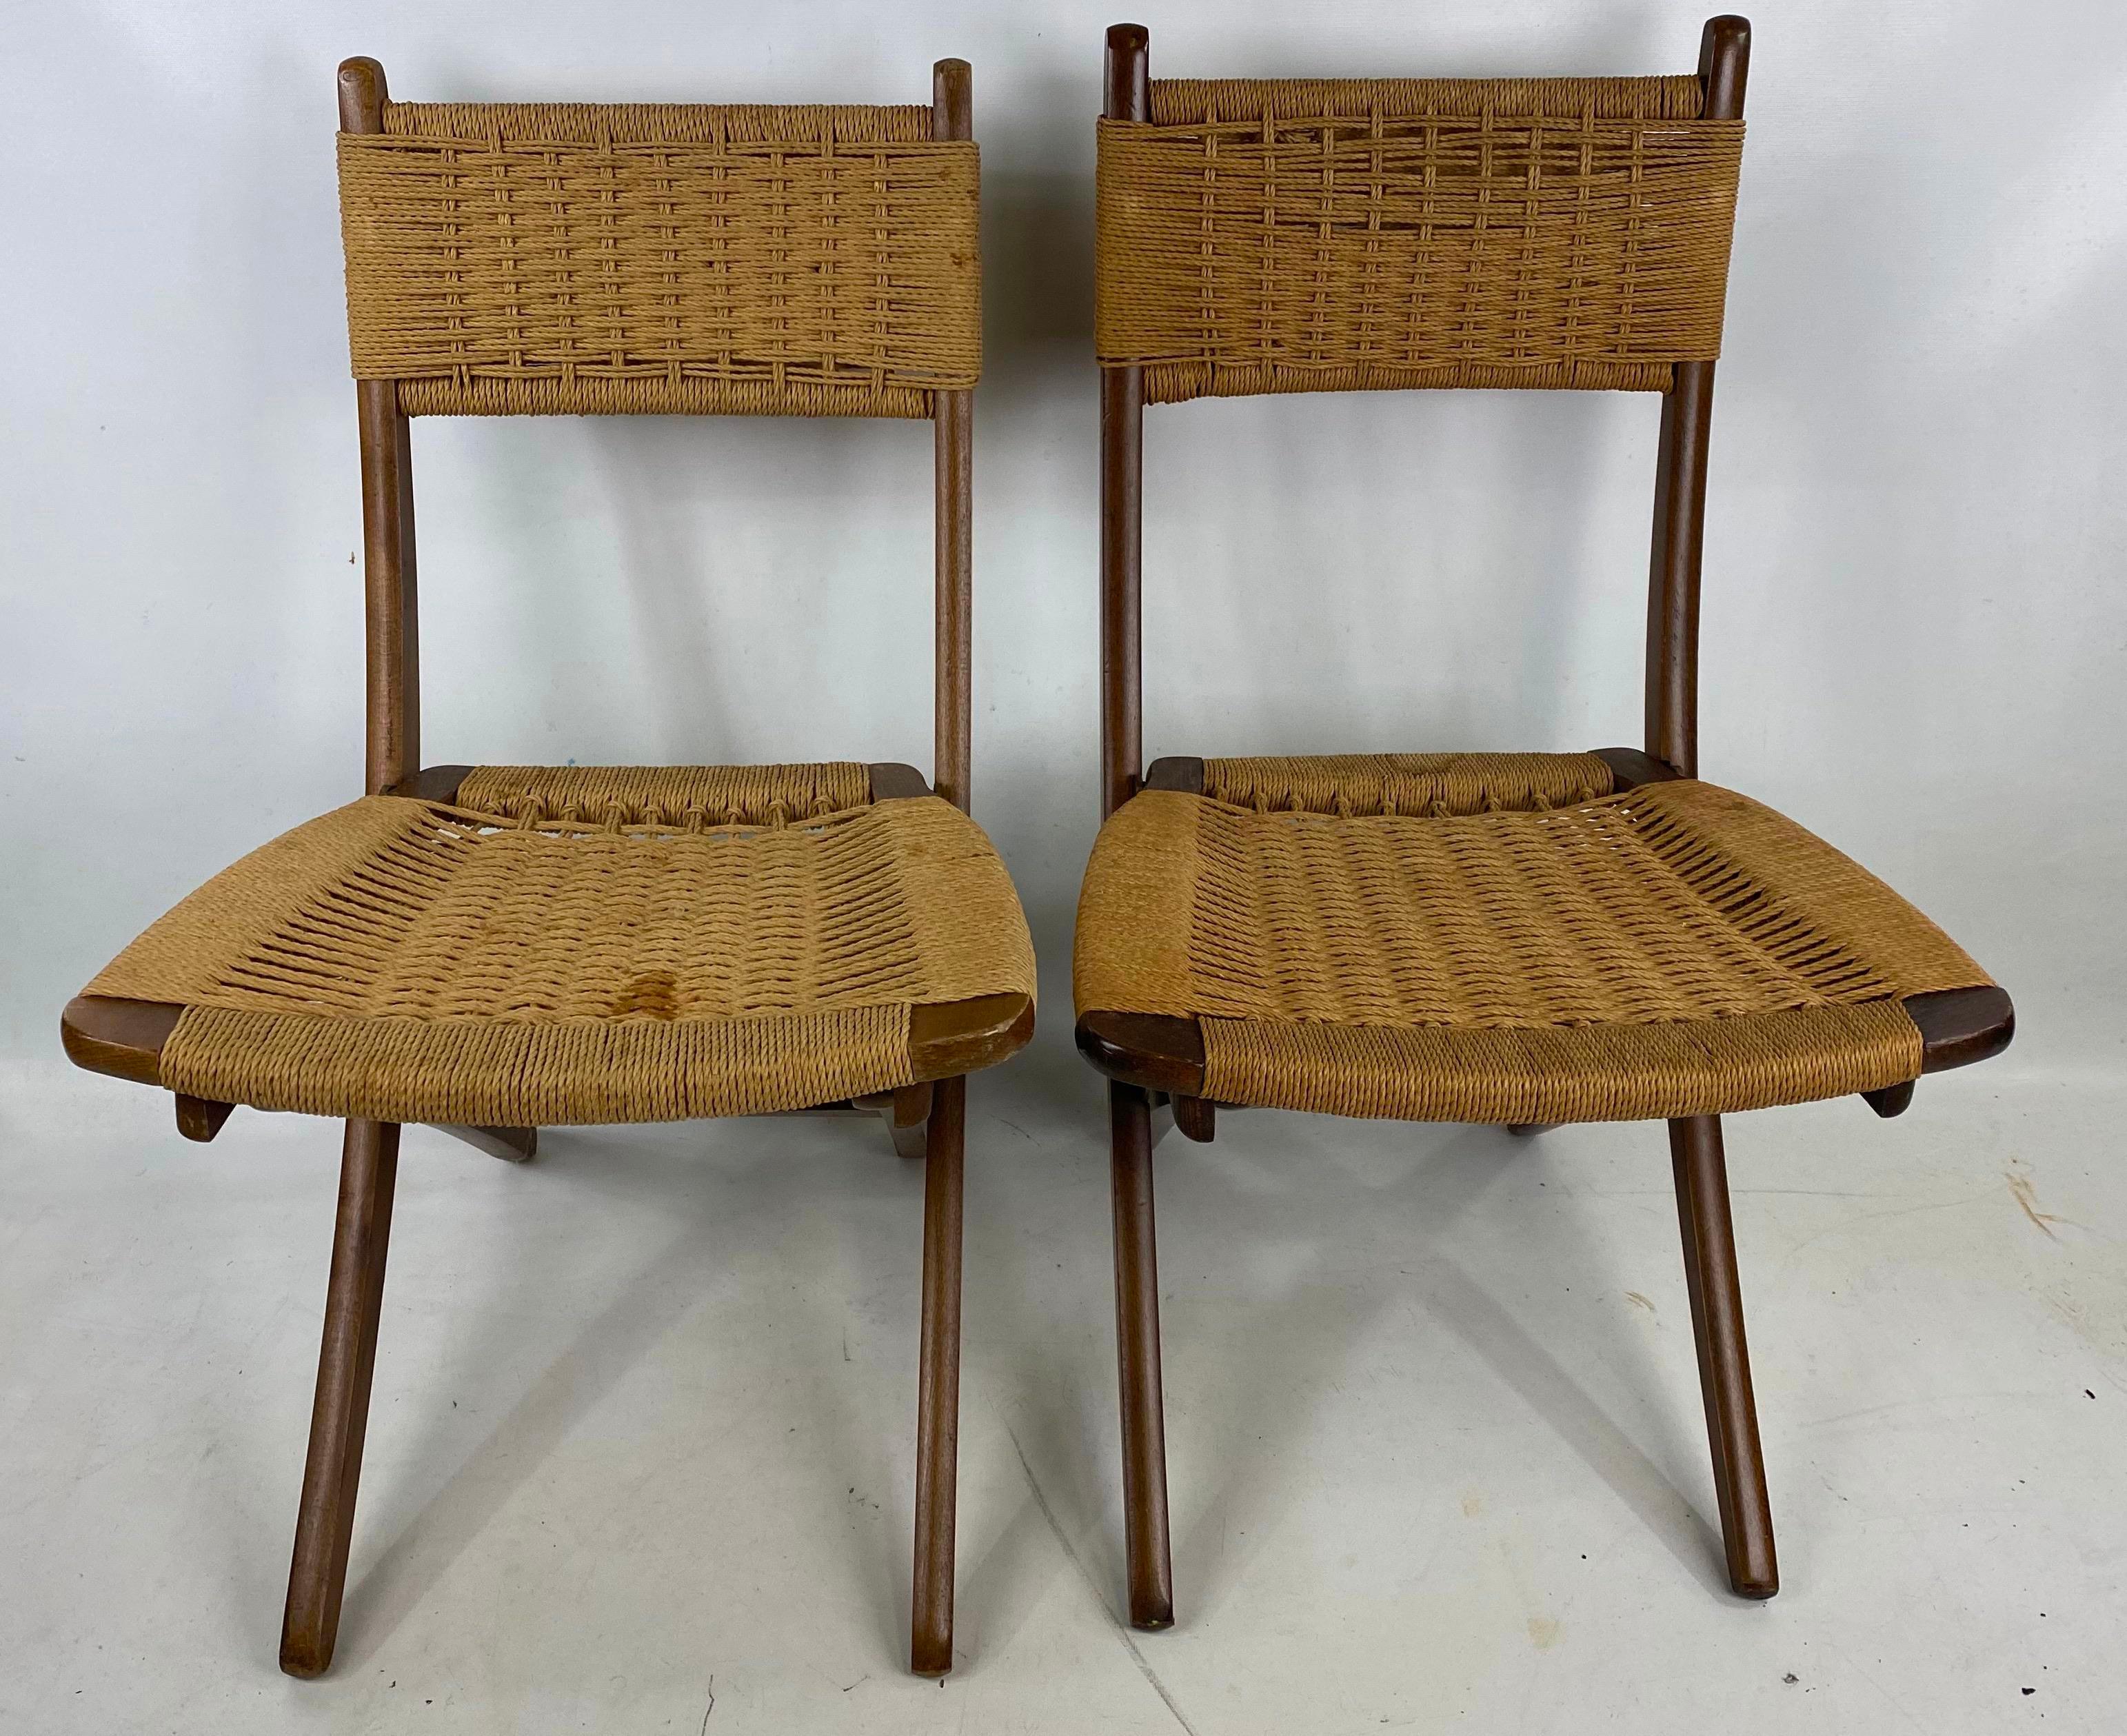 Midcentury Danish modern rope folding chairs set of 2.